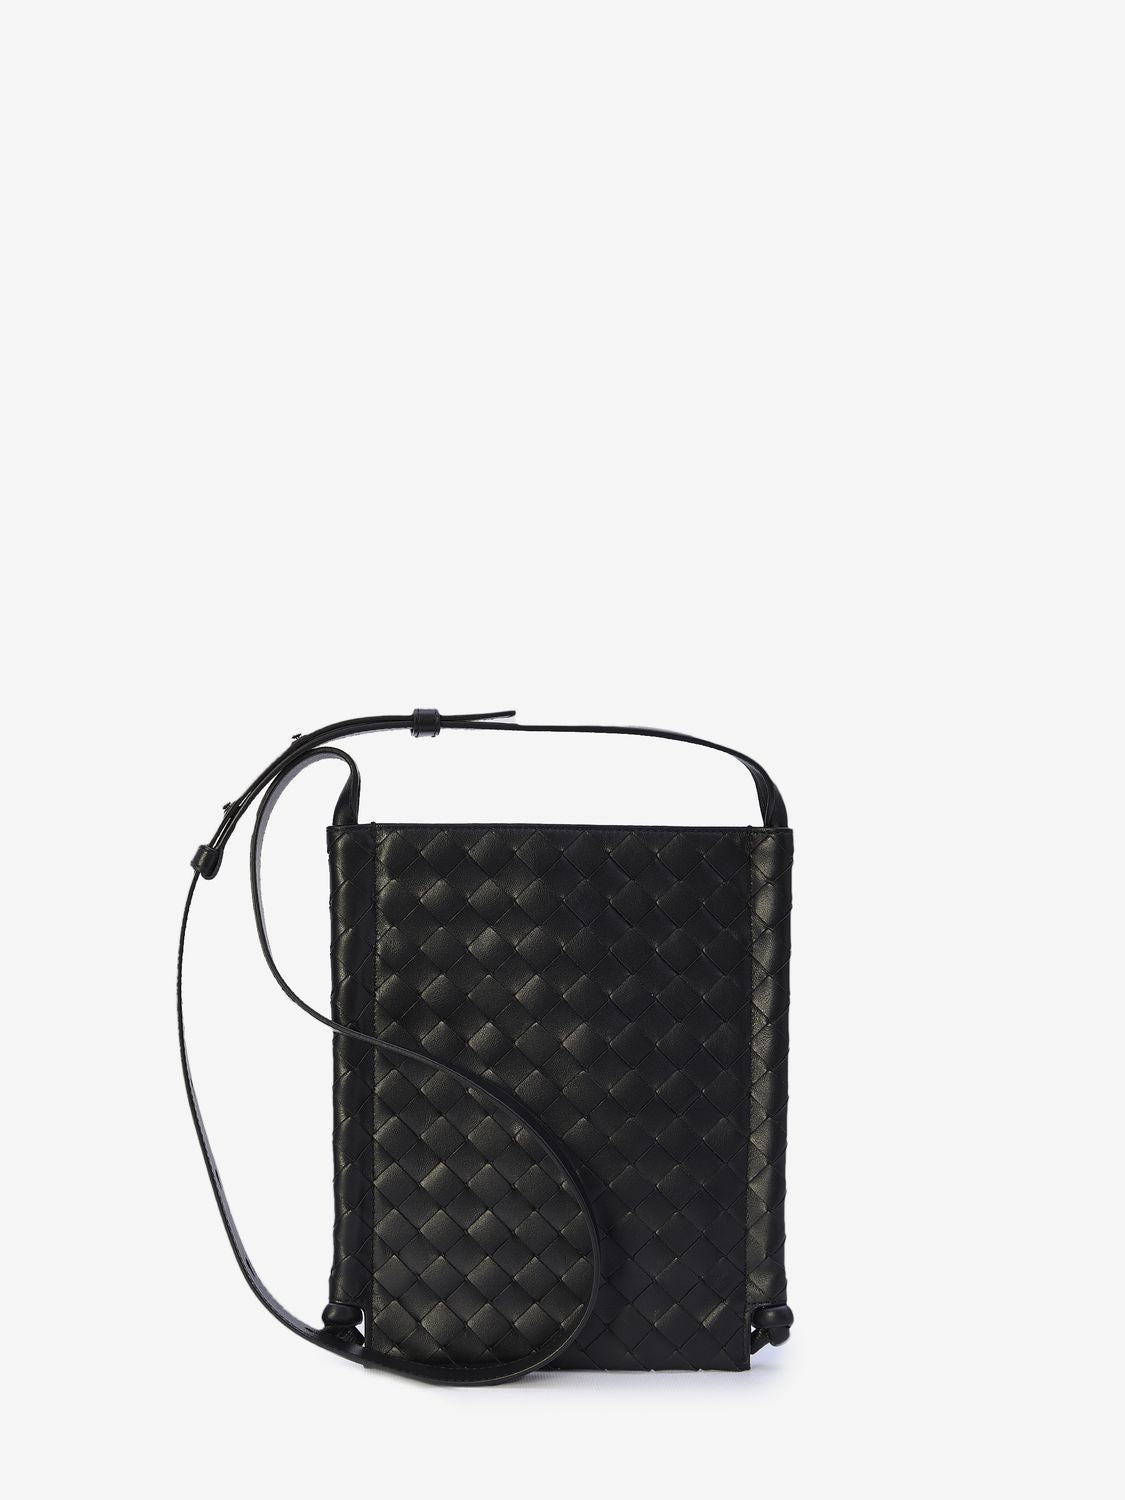 Men's Black Flat Loop Handbag with Intrecciato Motif and Knotted Details